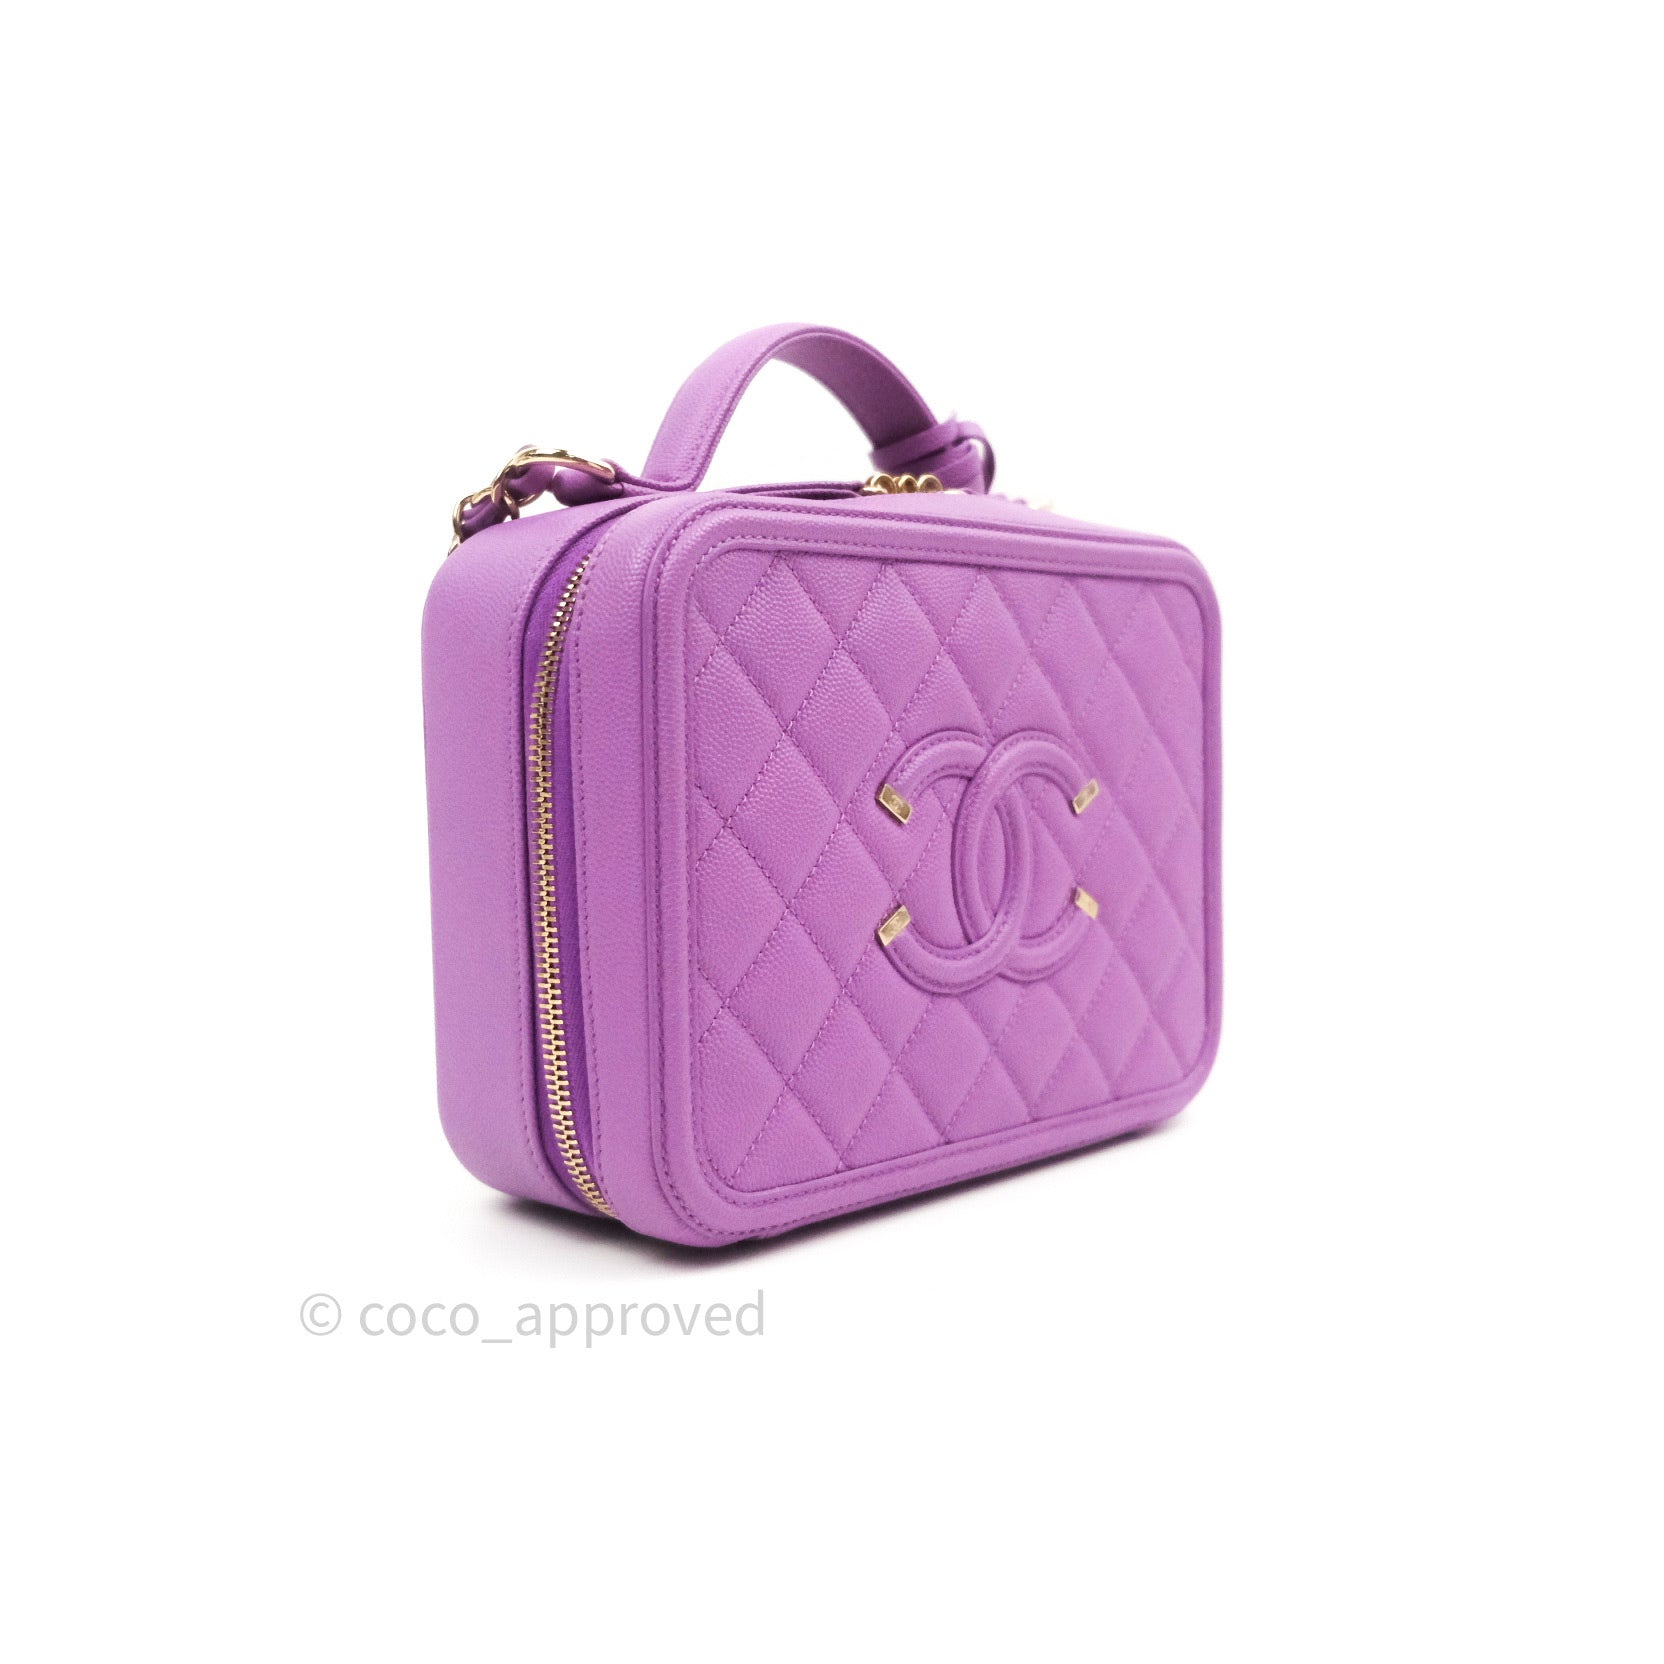 Chanel Tweed Quilted Filigree Vanity Bag in Purple Leather ref